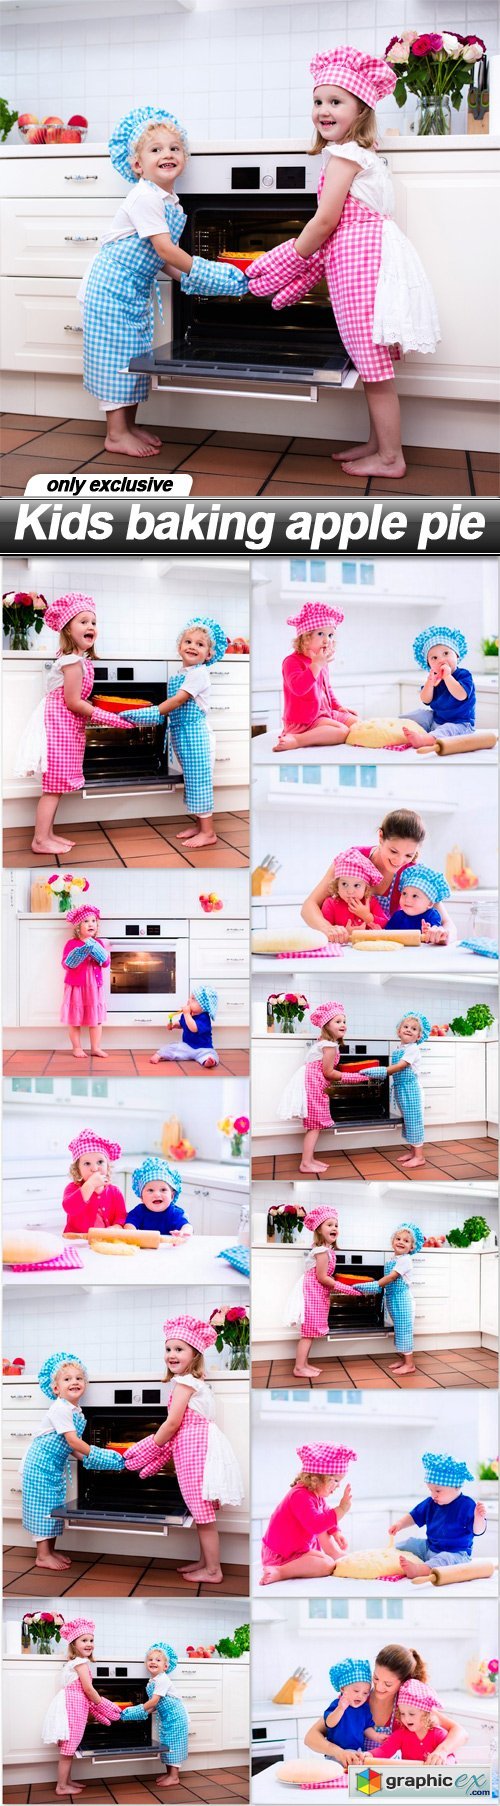 Kids baking apple pie - 11 UHQ JPEG